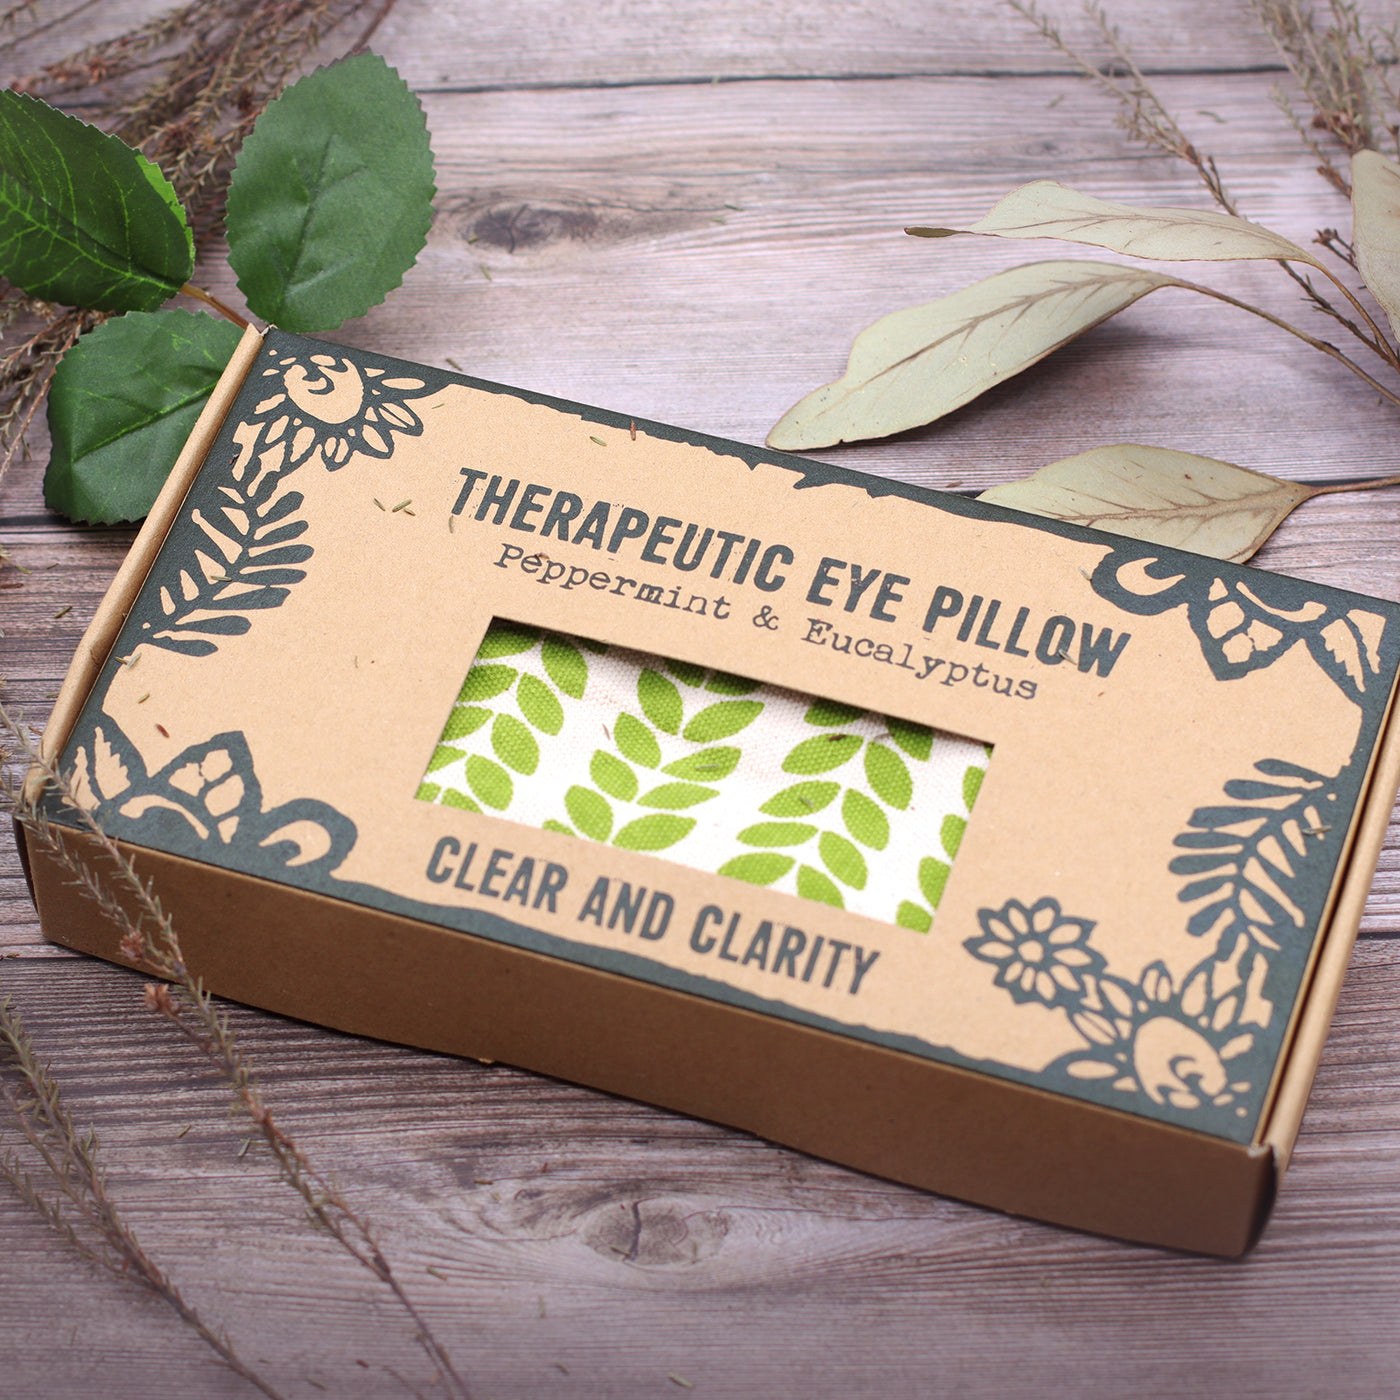 Agnes & Cat Aromatherapy Eye Pillow - Clear - Peppermint & Eucalyptus